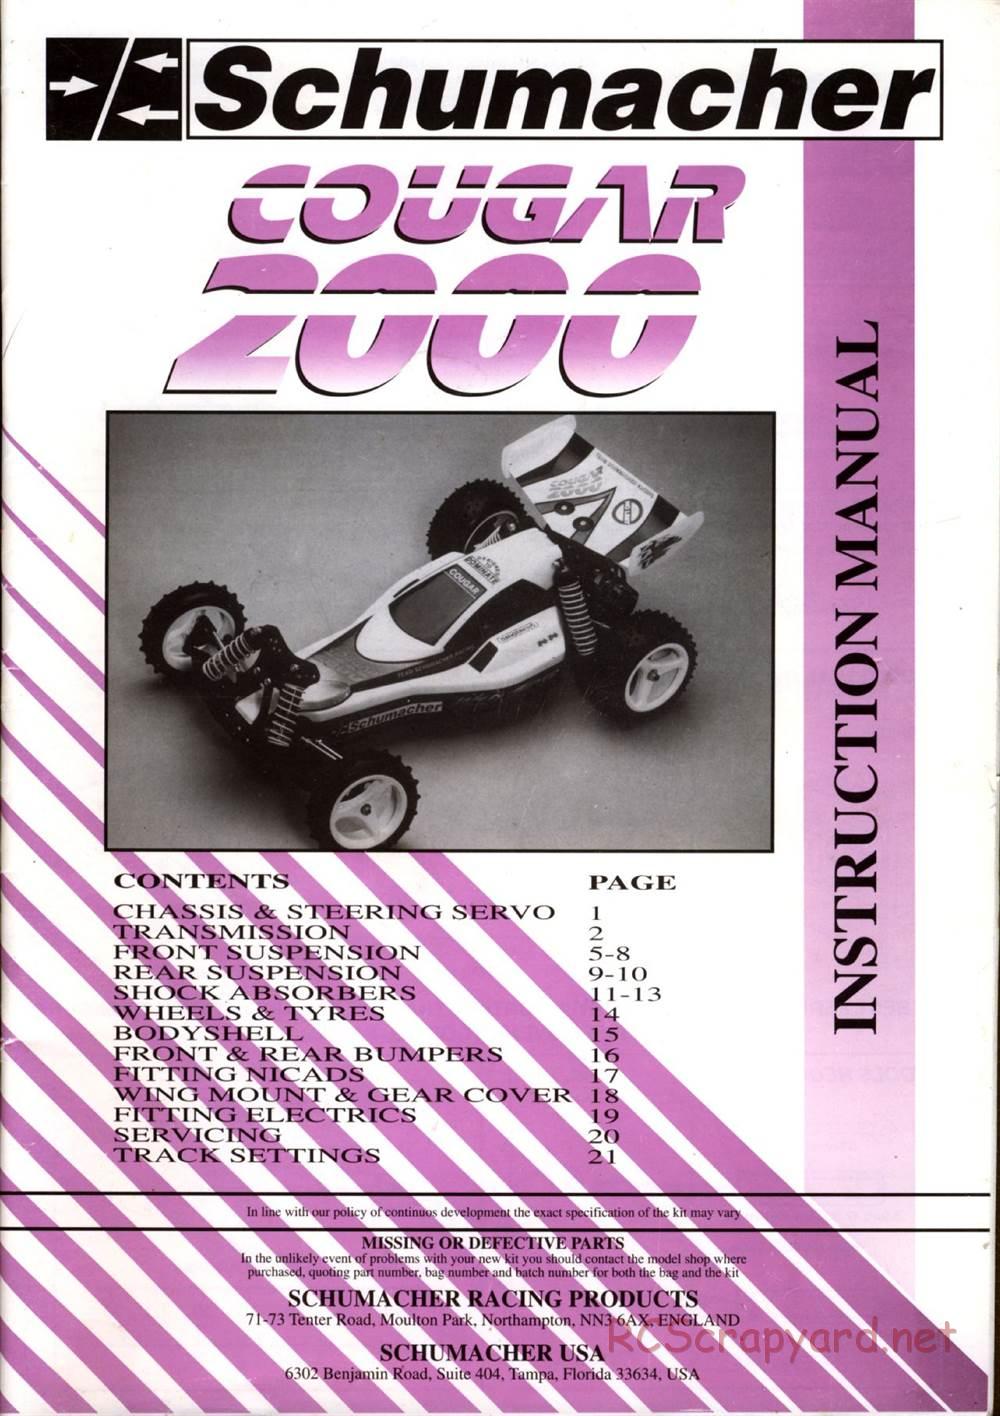 Schumacher - Cougar 2000 - Manual - Page 1